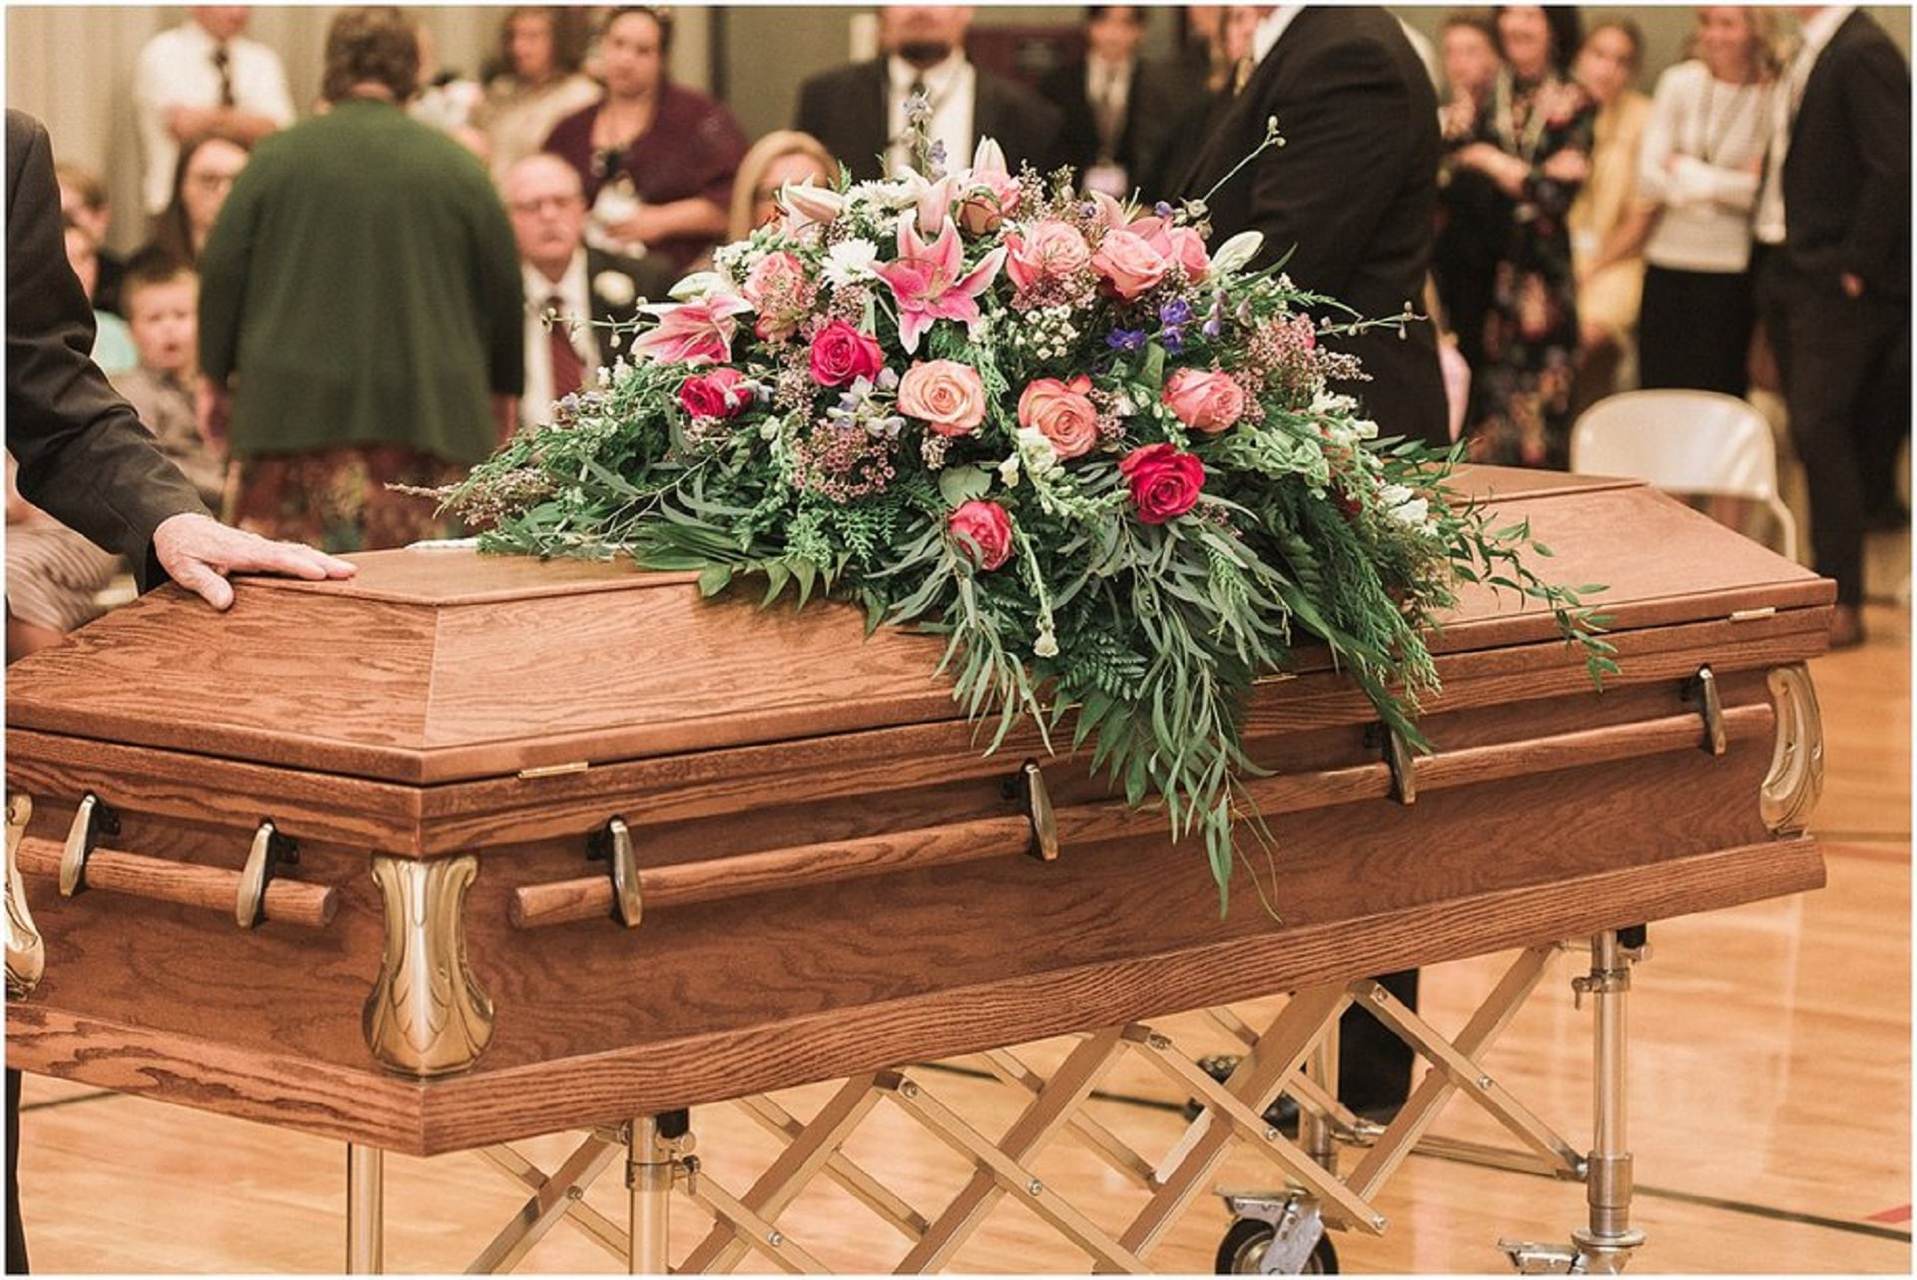 Funeral Ceremony